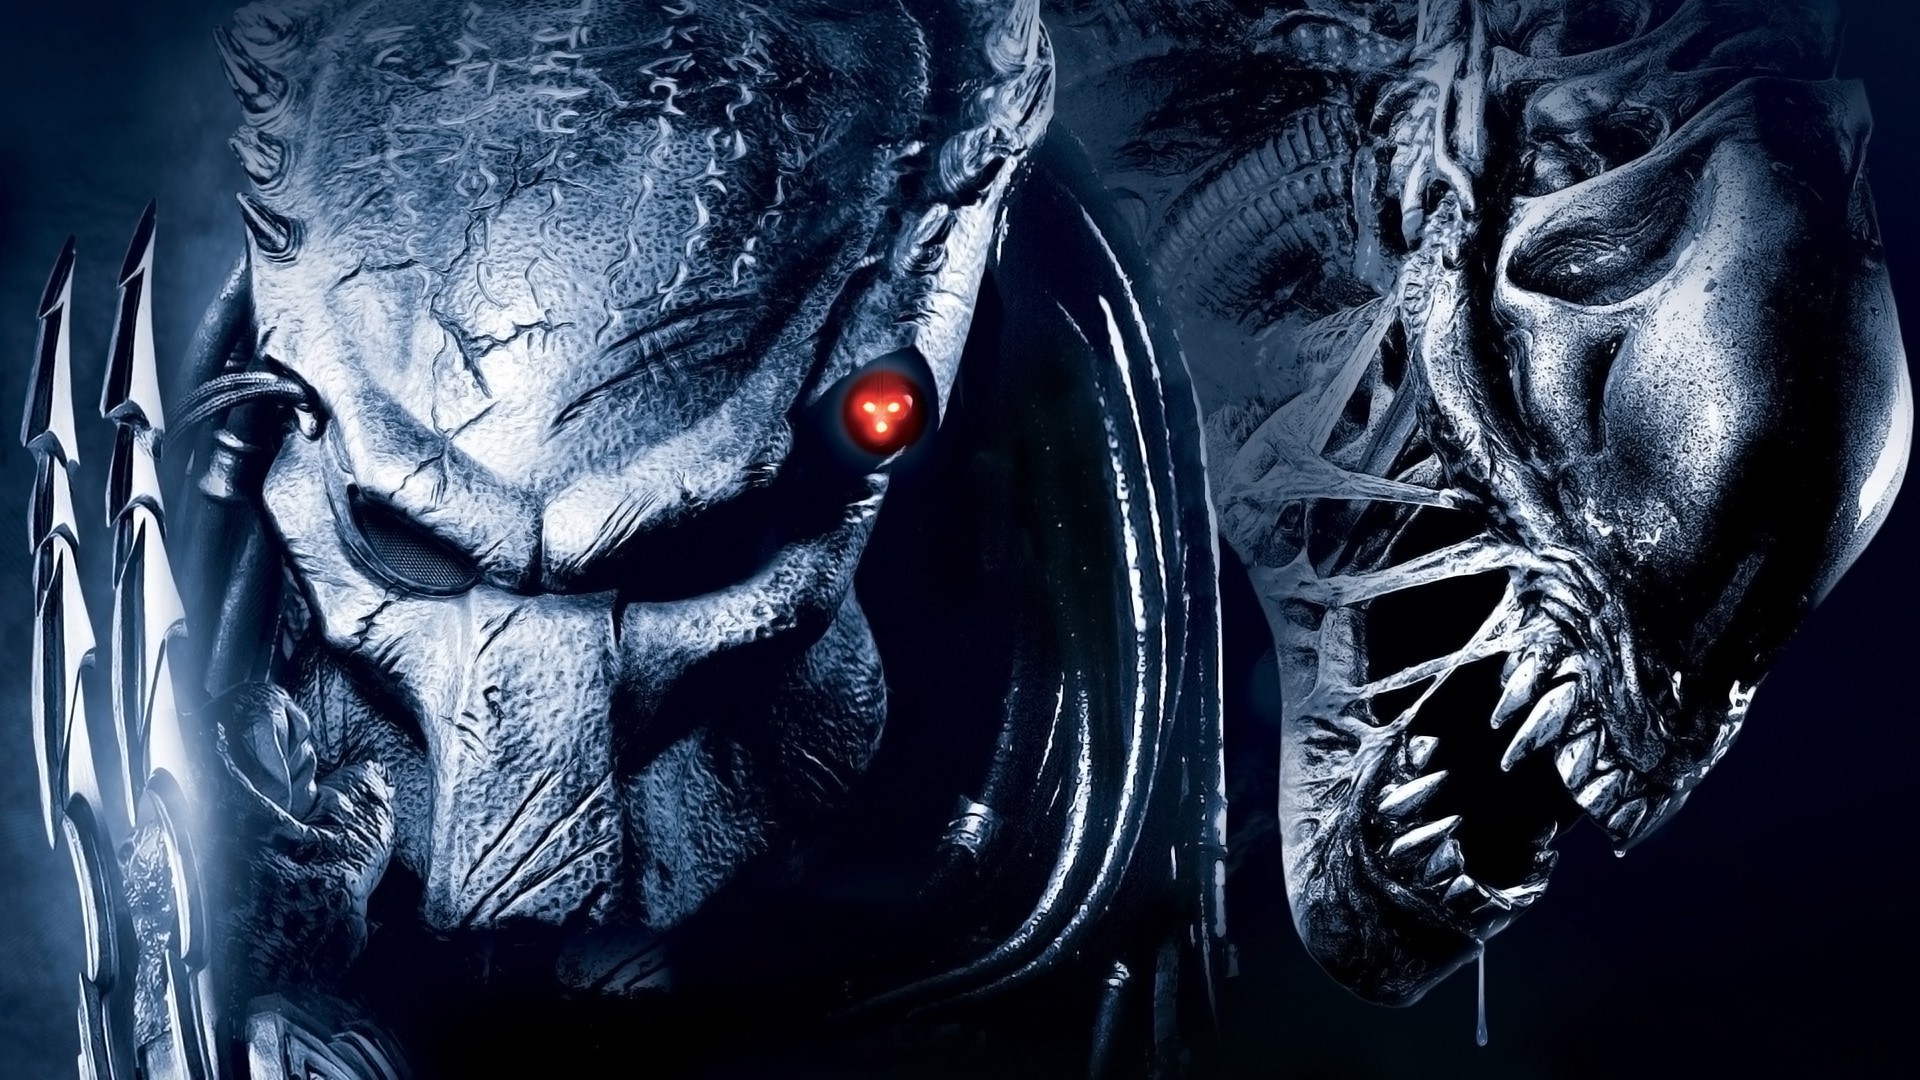 Alien vs predator aliens movie predator movie wallpapers hd desktop and mobile backgrounds